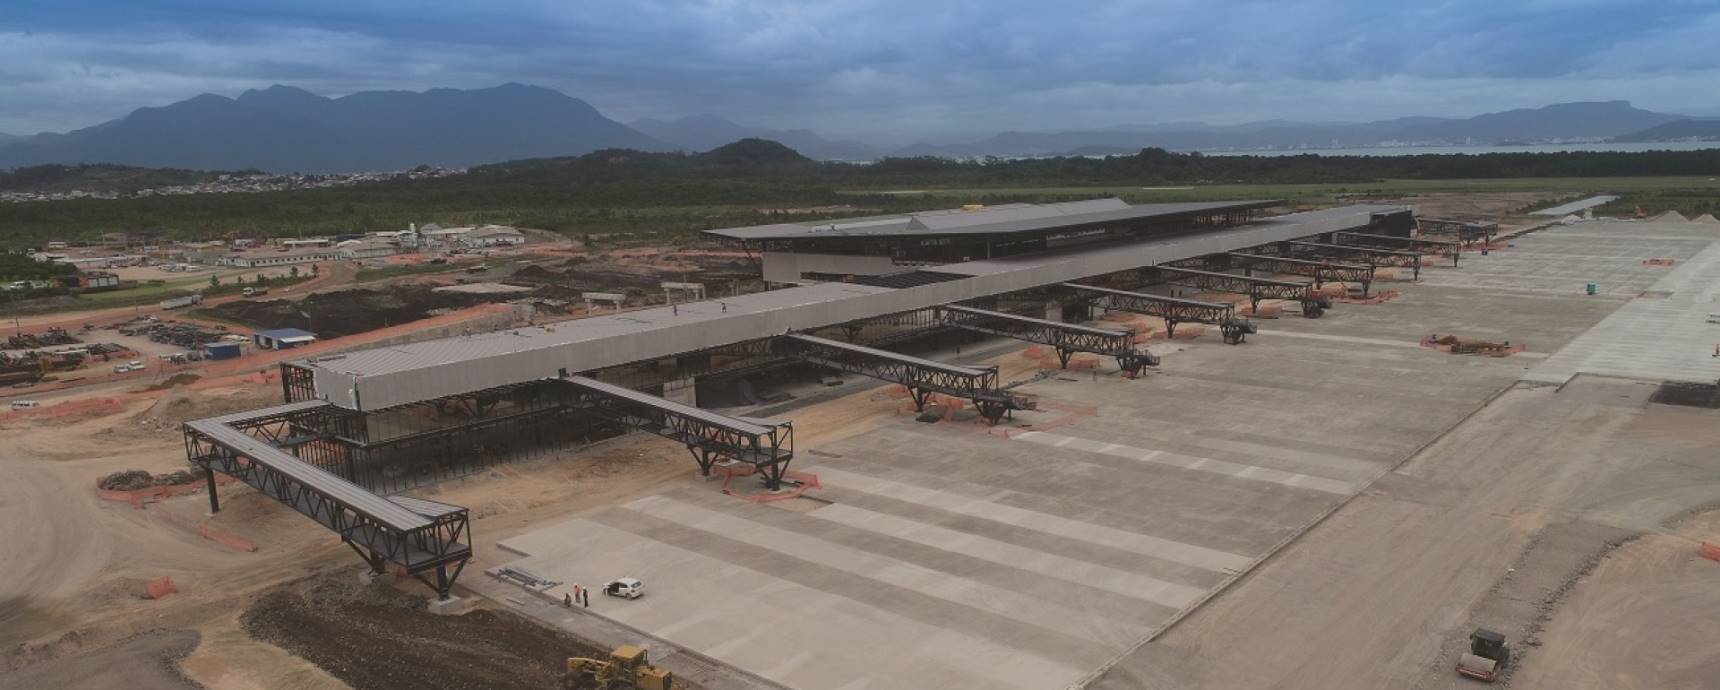 VÍDEO: obra do novo terminal de passageiros chega a 70% do total concluído